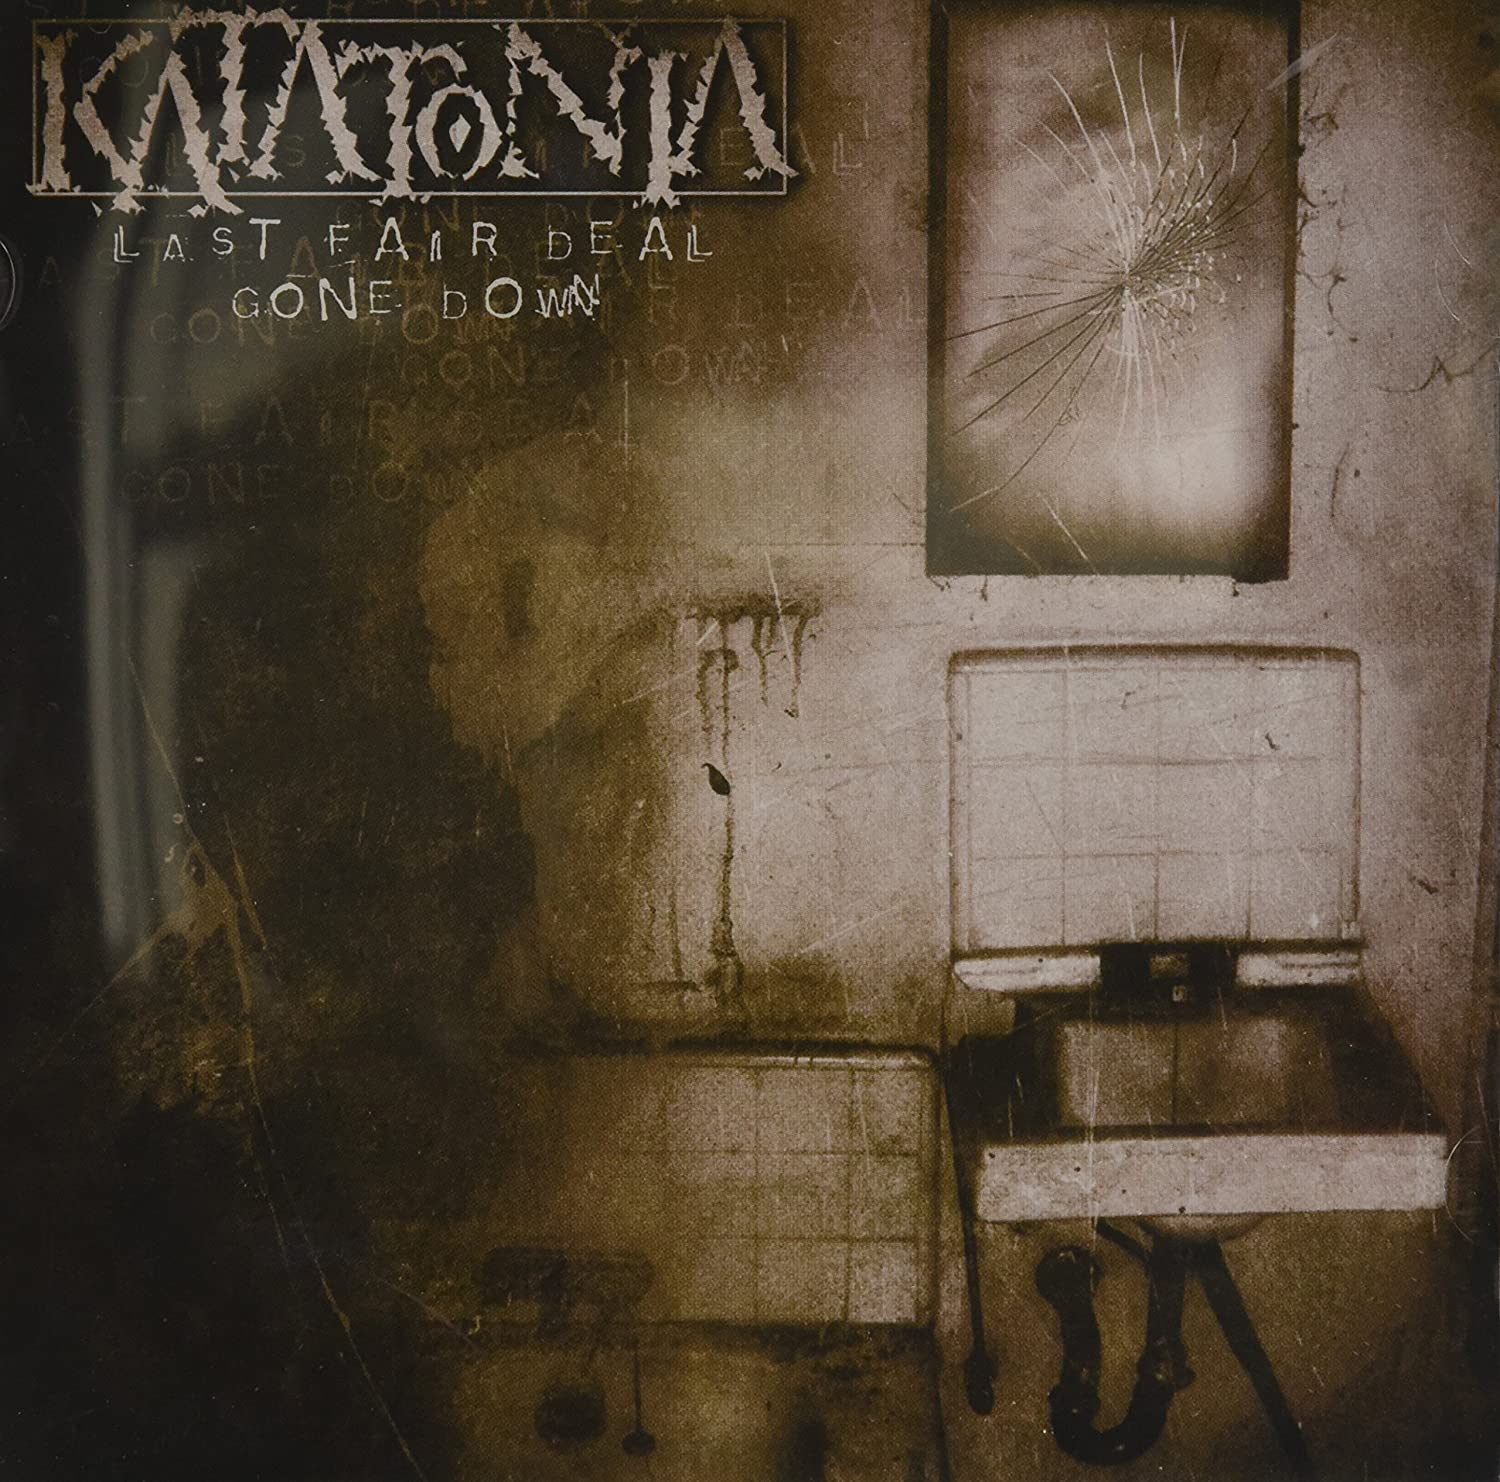 Katatonia - Last Fair Deal Gone Down (2004 reissue with 3 bonus tracks) - CD - New